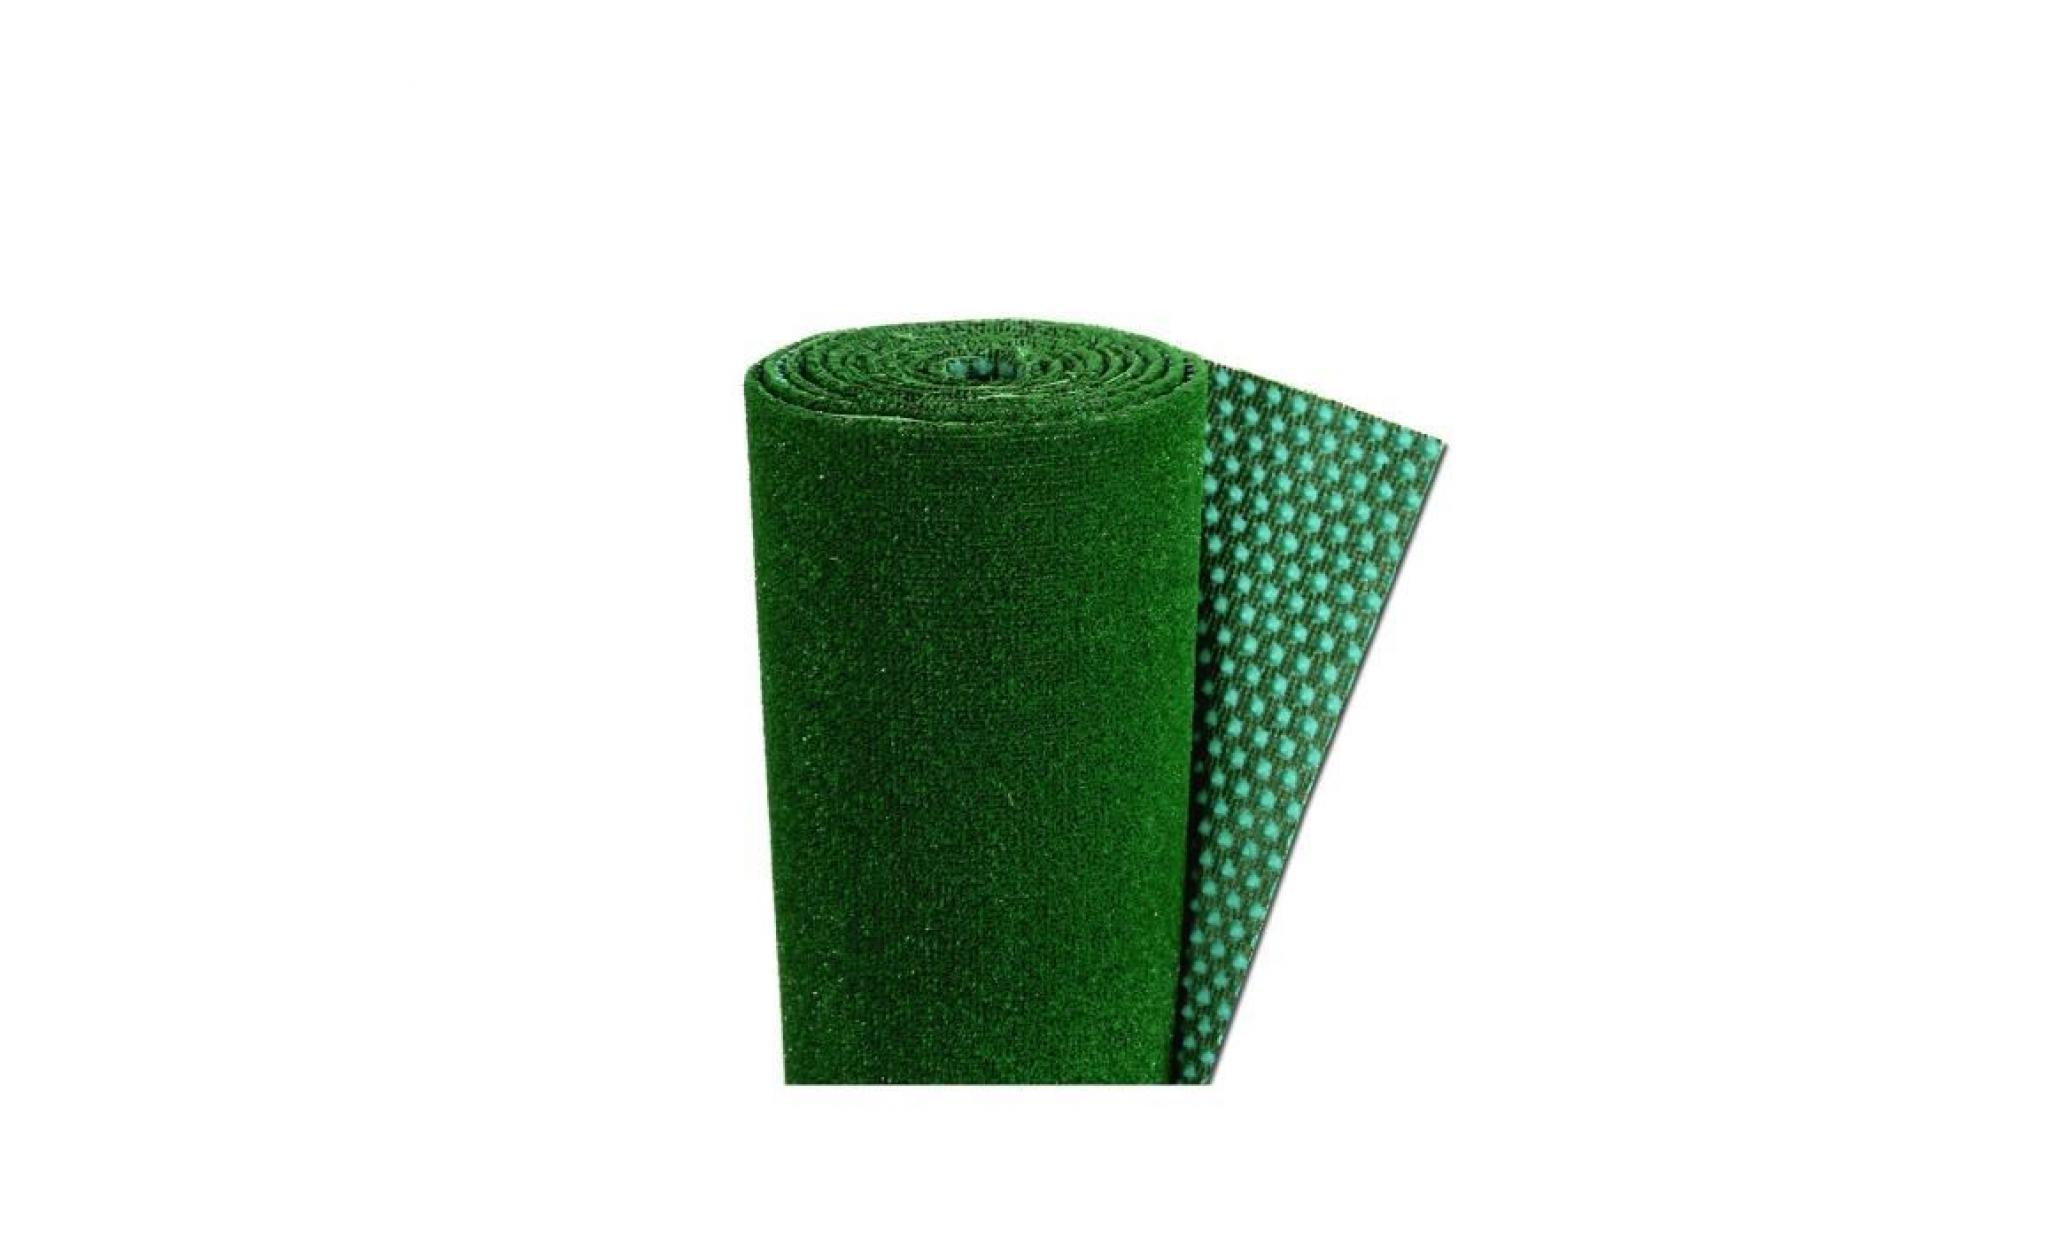 york   tapis type gazon artificiel avec nubs – pour jardin, terrasse, balcon   vert   [200x350 cm] pas cher